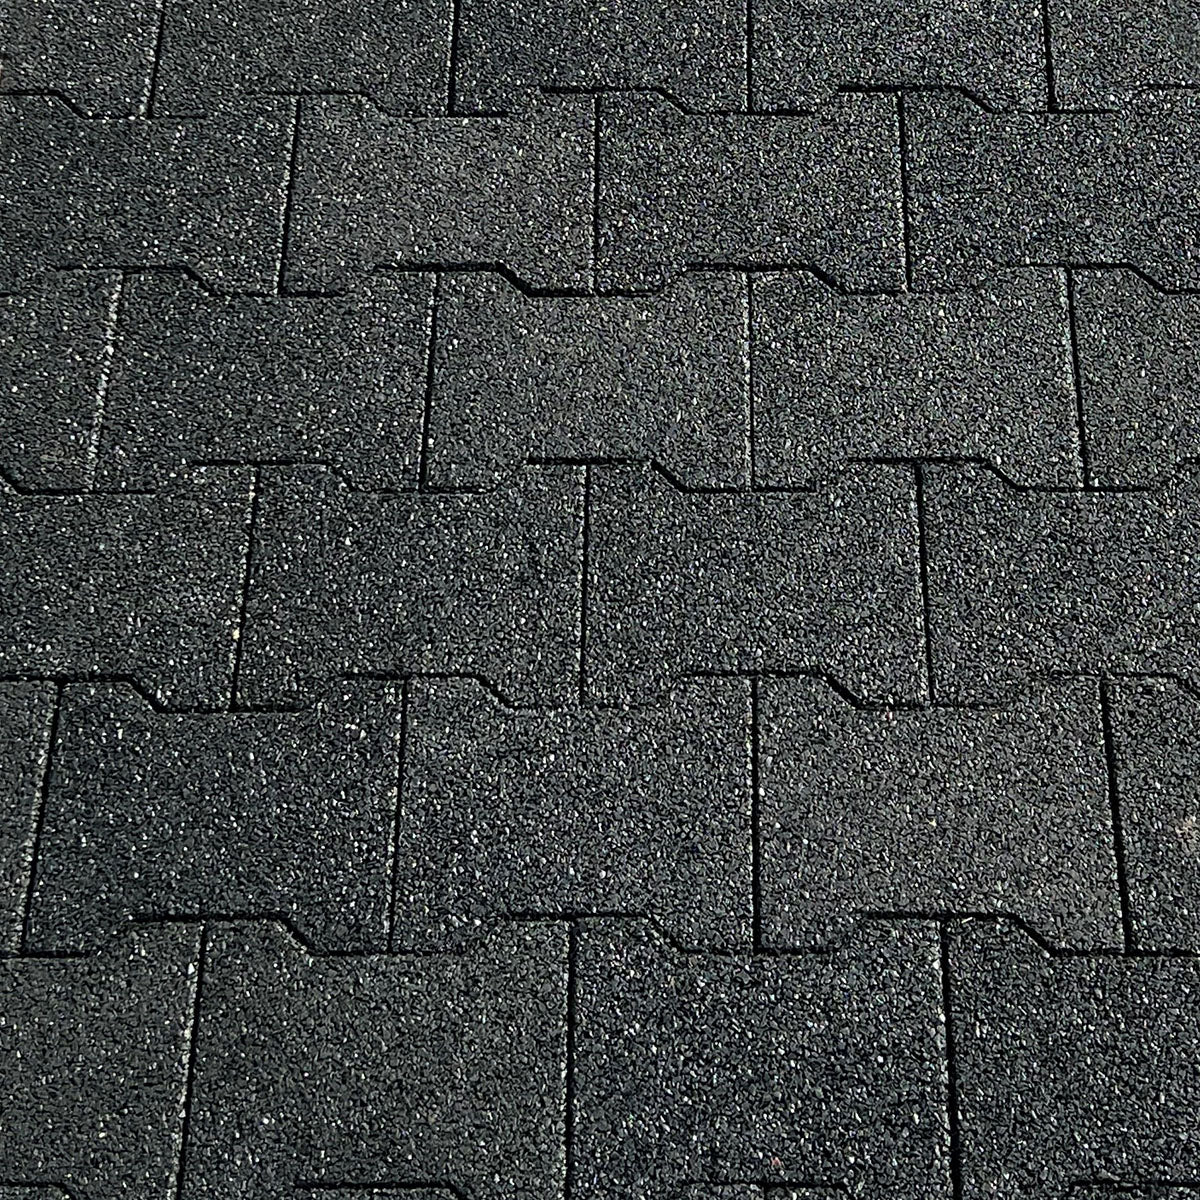 black rubber interlocking tiles